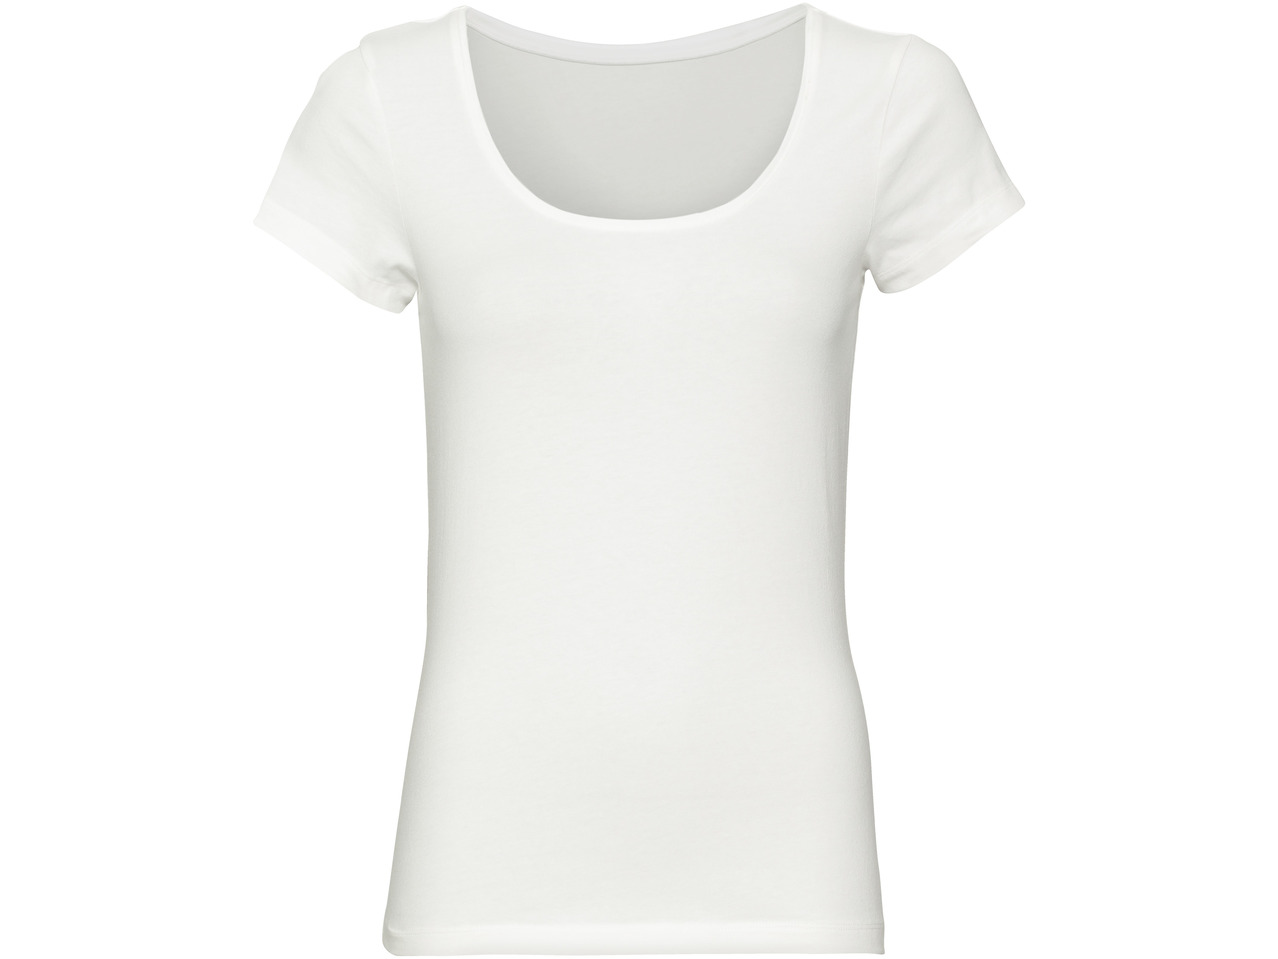 ESMARA LINGERIE(R) T-shirt